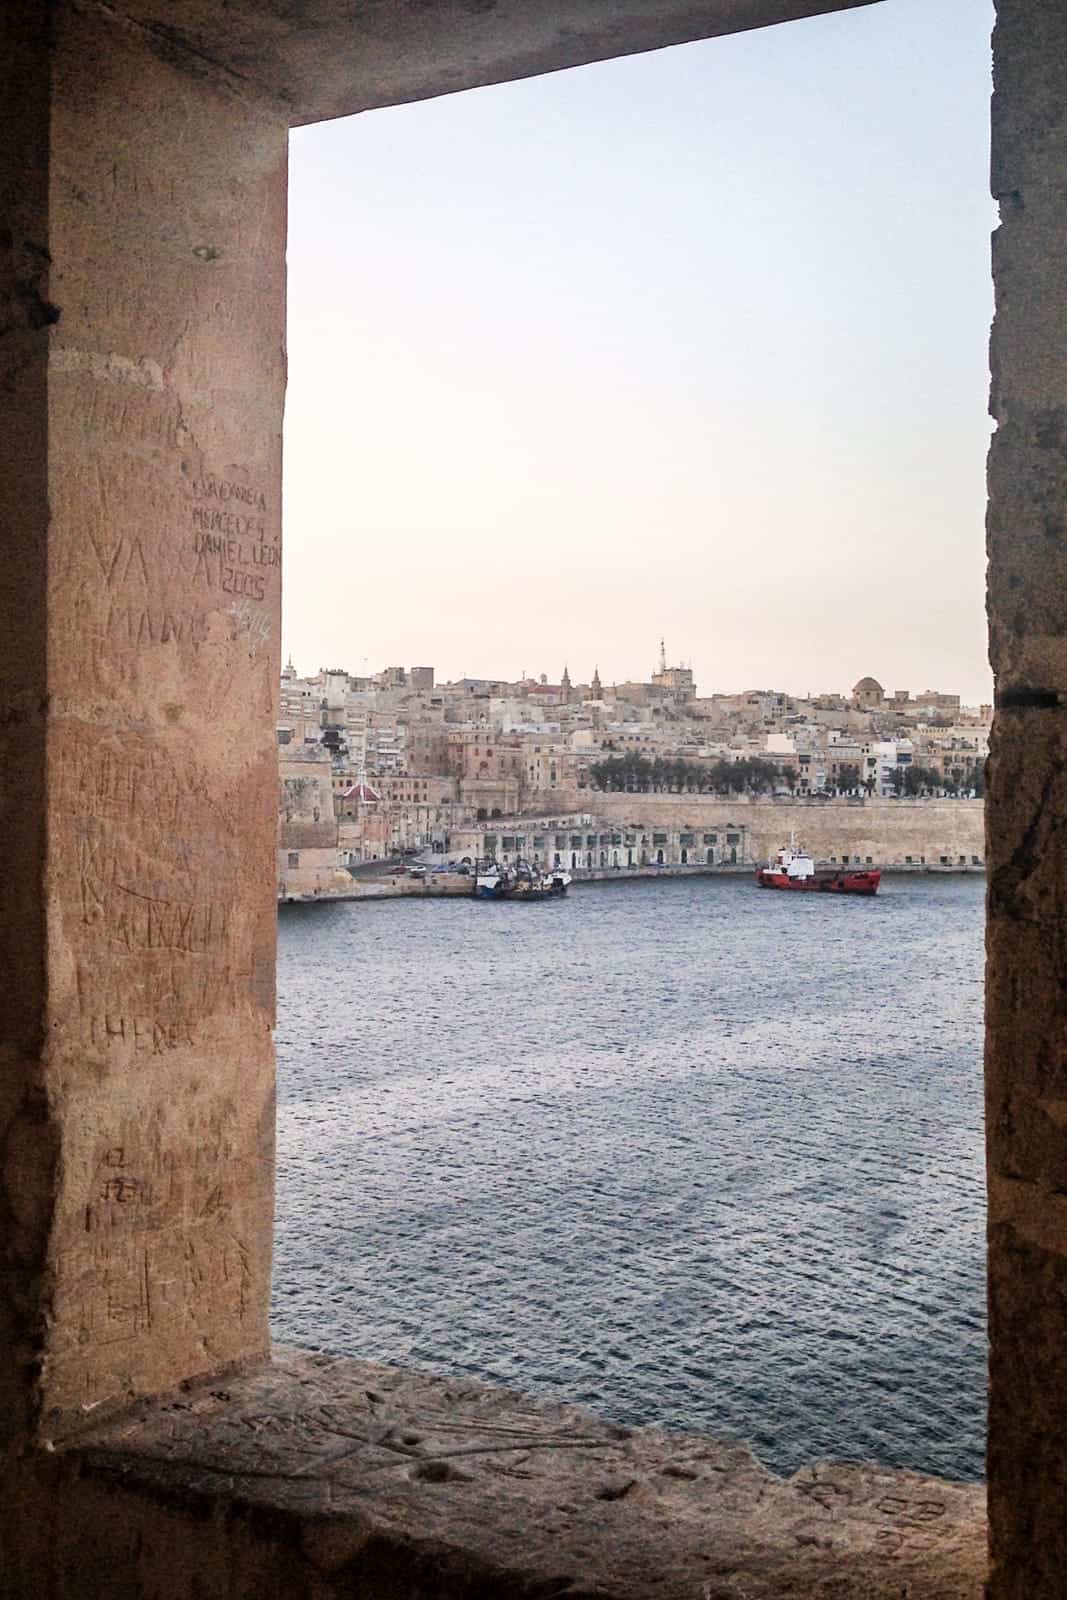 Secret Senglea rock window viewpoint in Malta with a view to Valletta